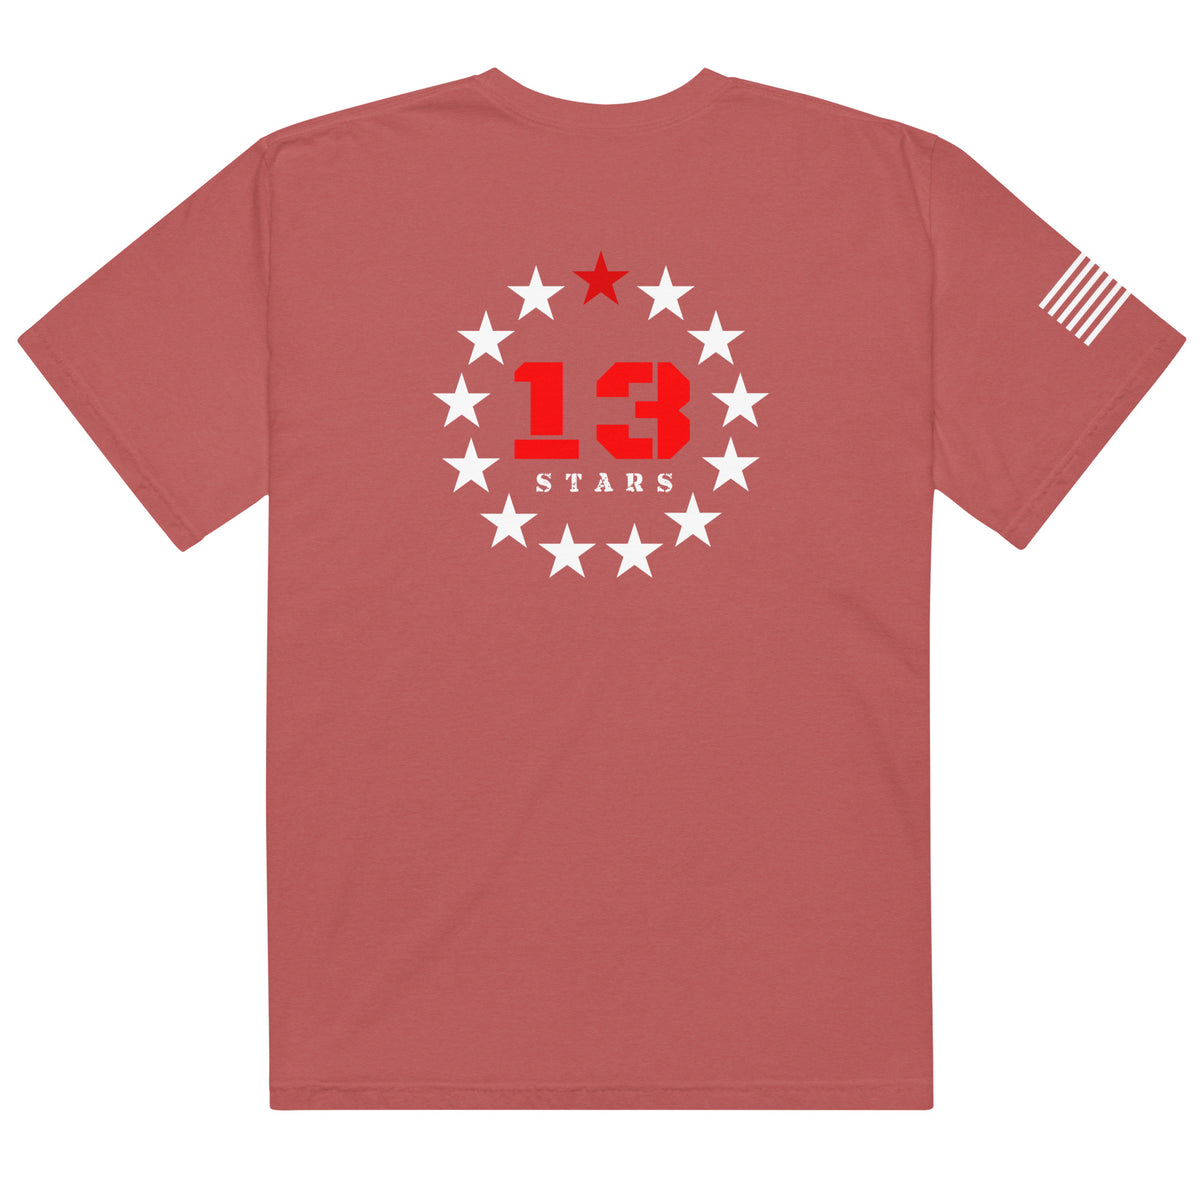 13 Stars - T-Shirt